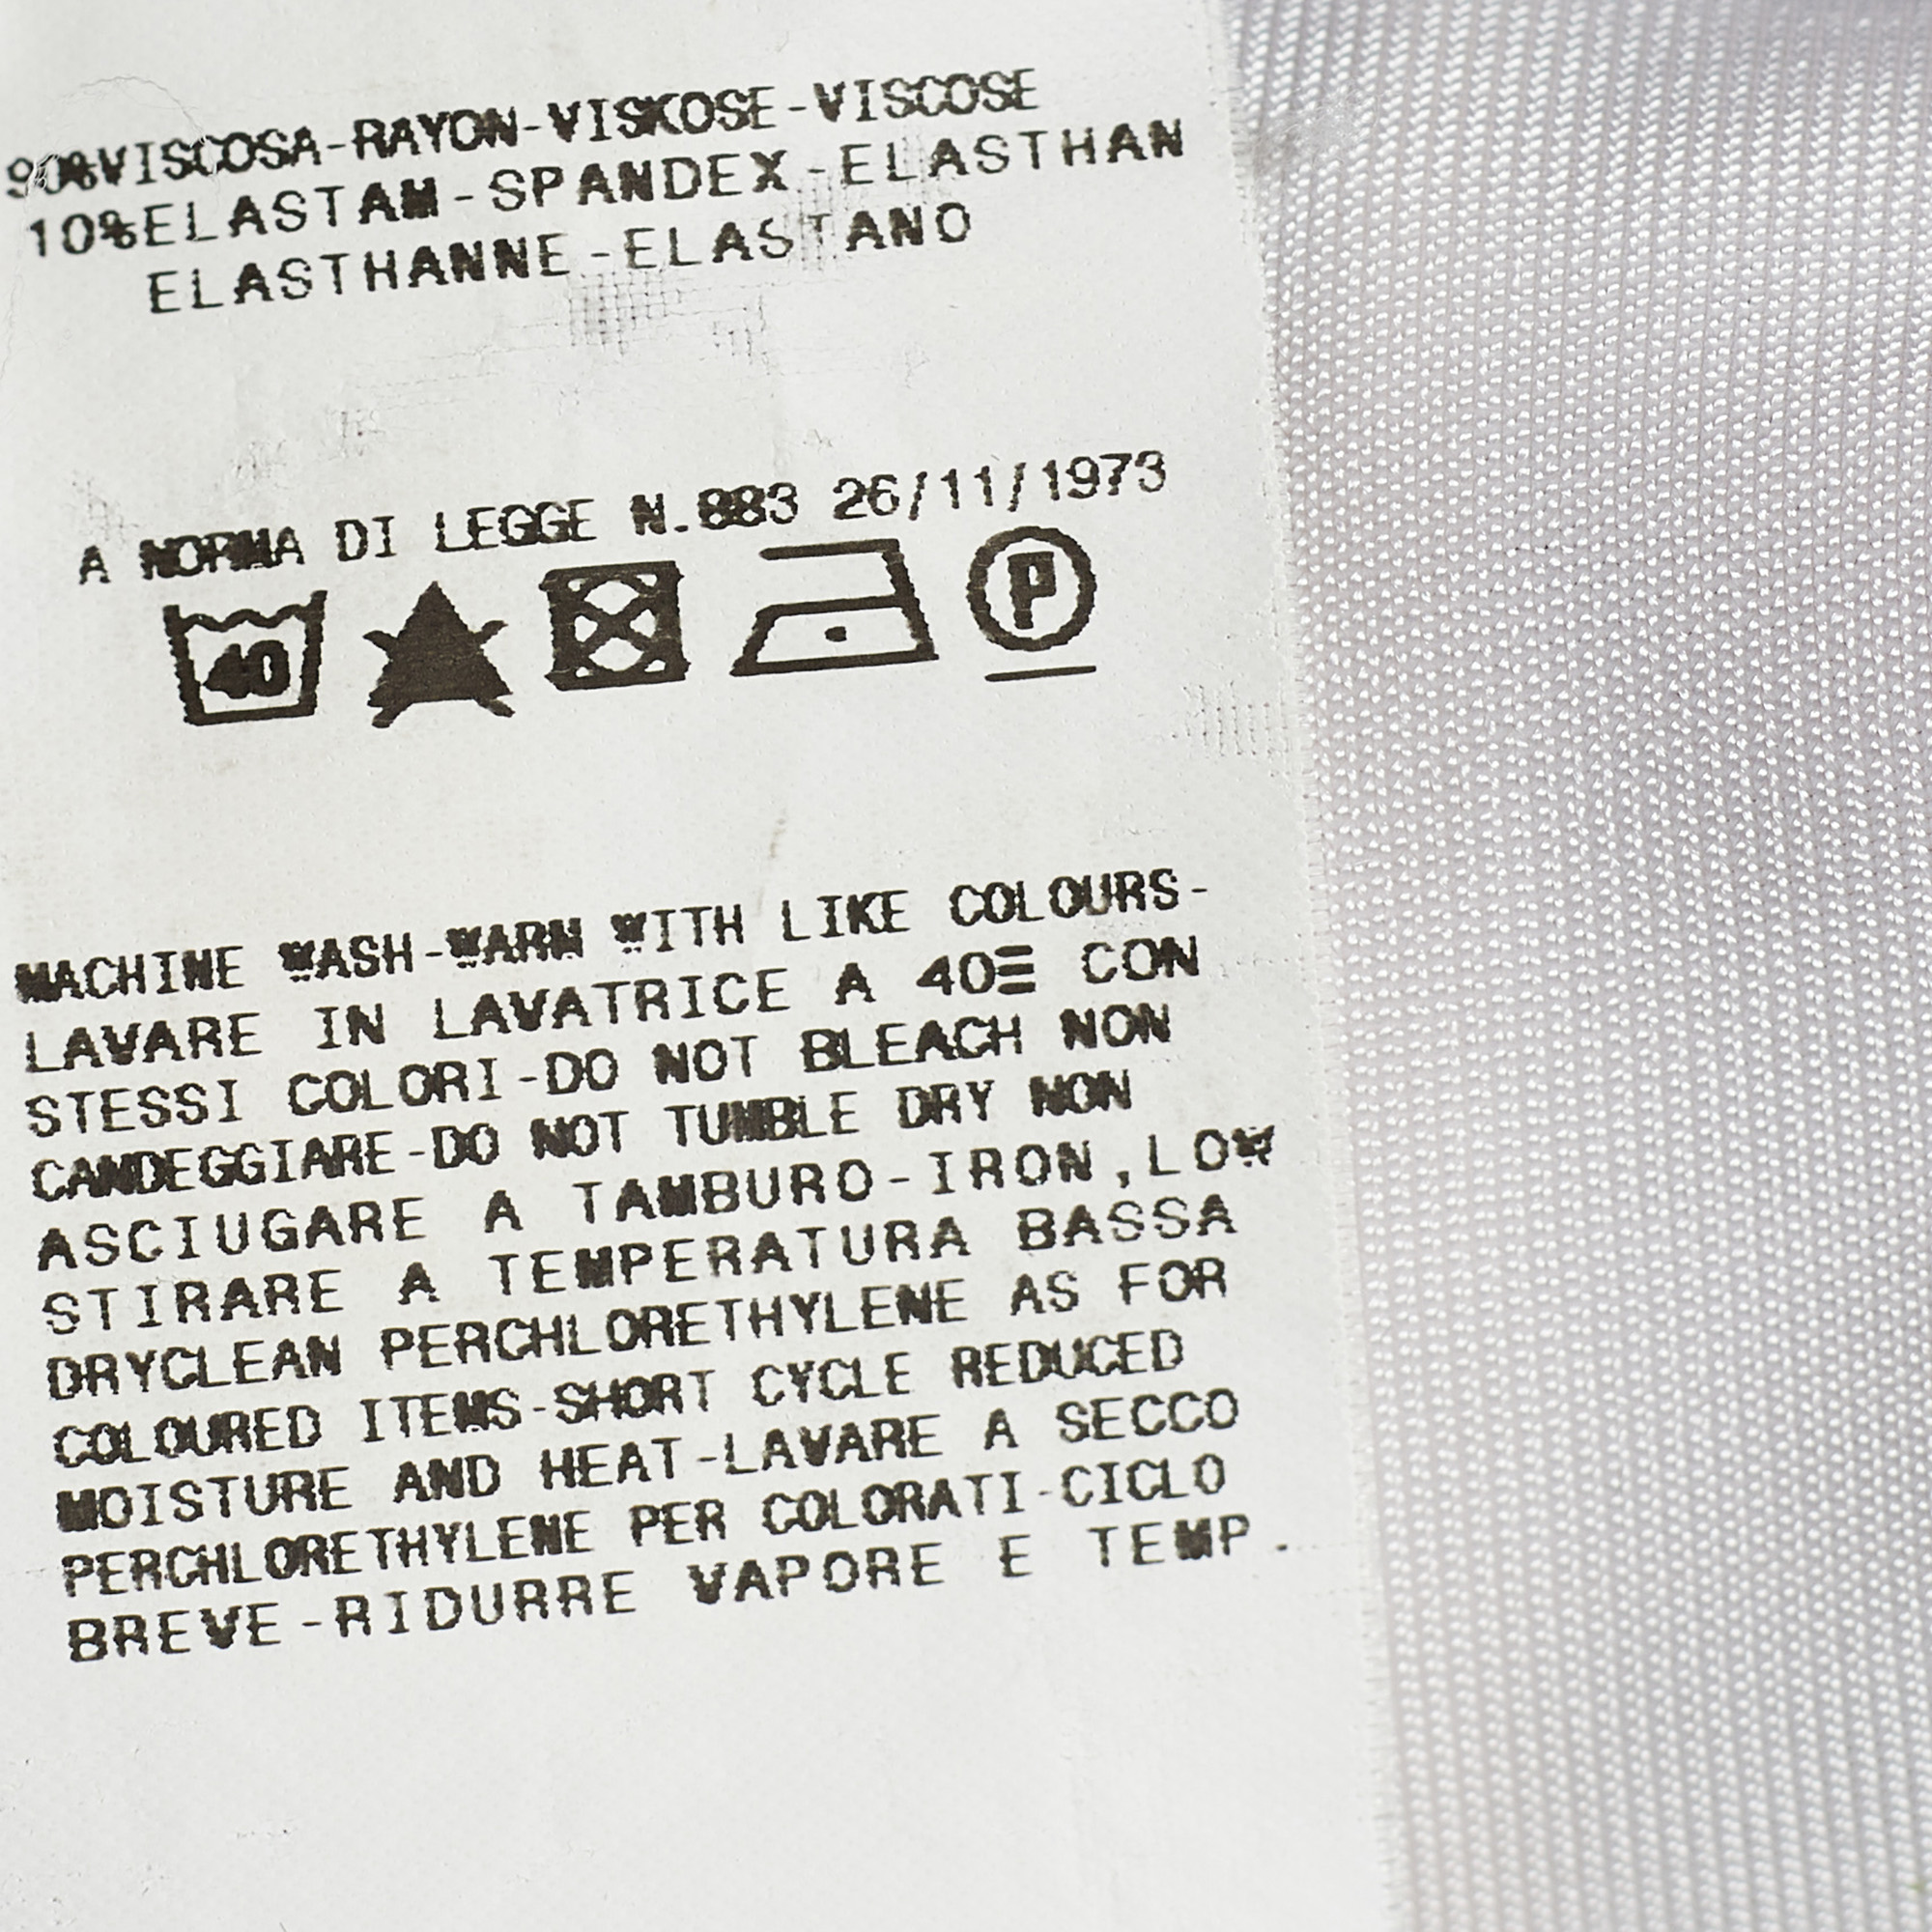 Just Cavalli White Printed Jersey Sleeve Dress M